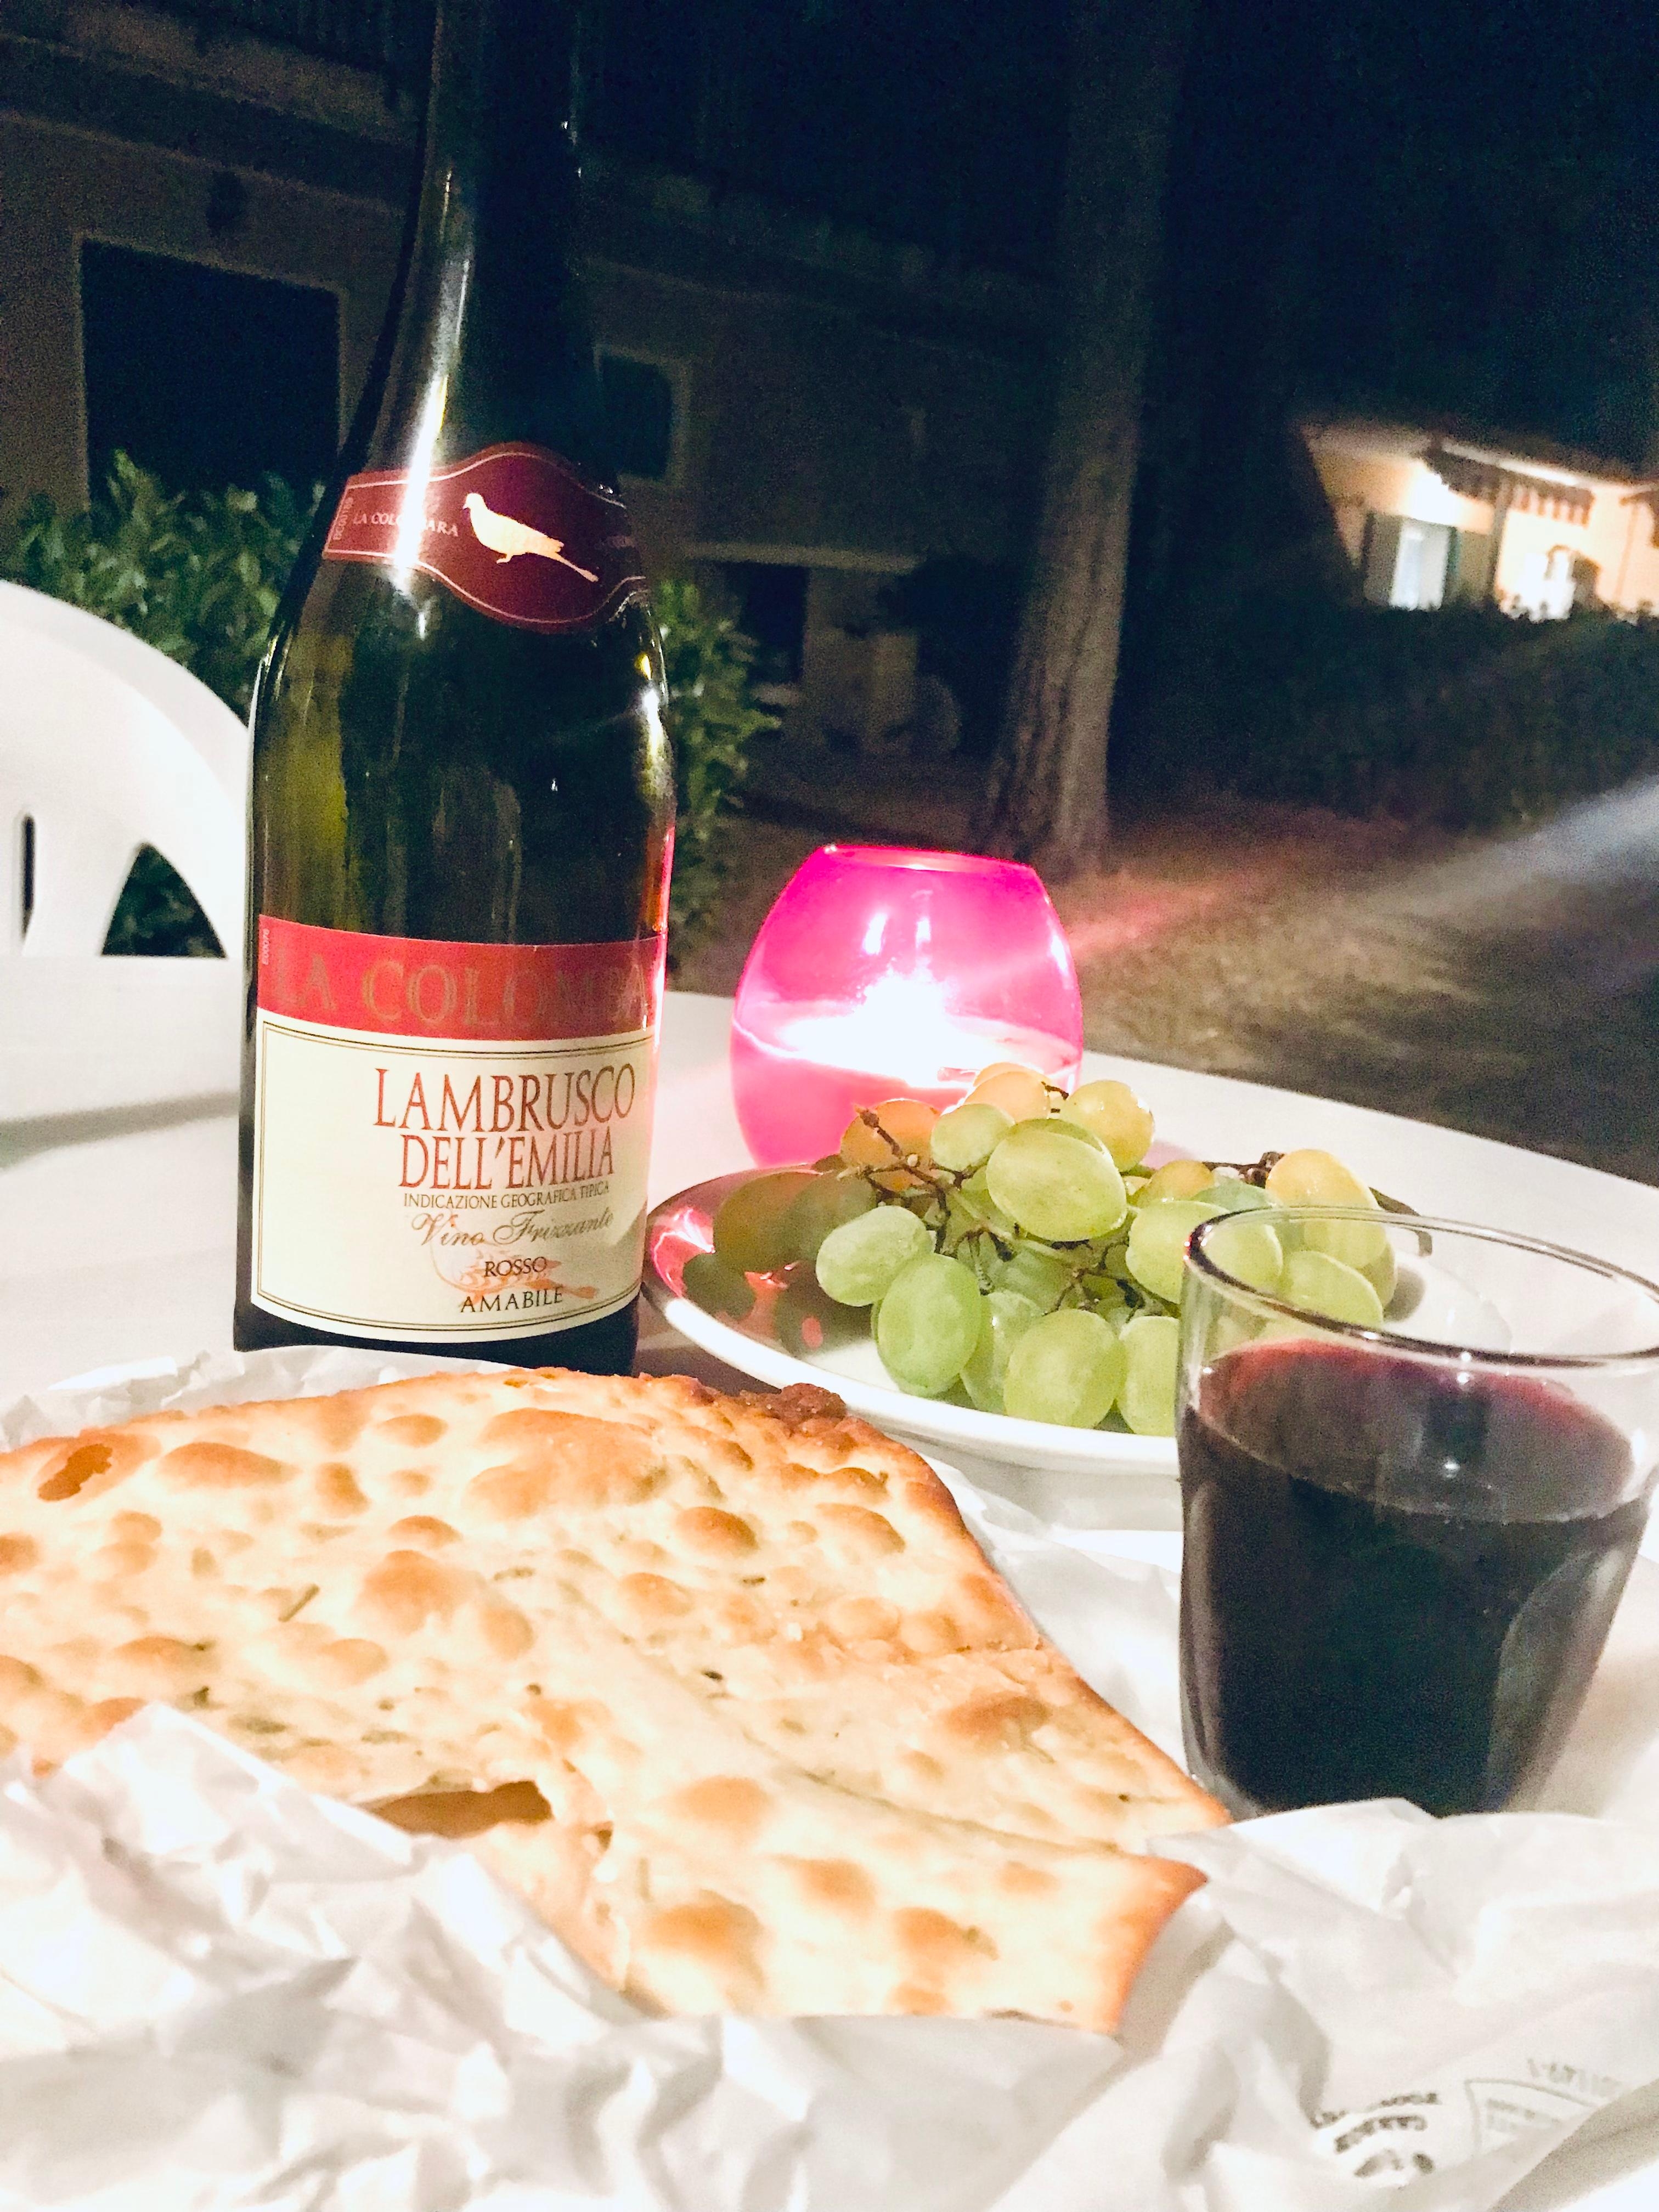 Letzter Abend in Italien 🇮🇹 
#wine #snack #villagio #outside #allesgehtzuende #bellaitalia #amore❤️